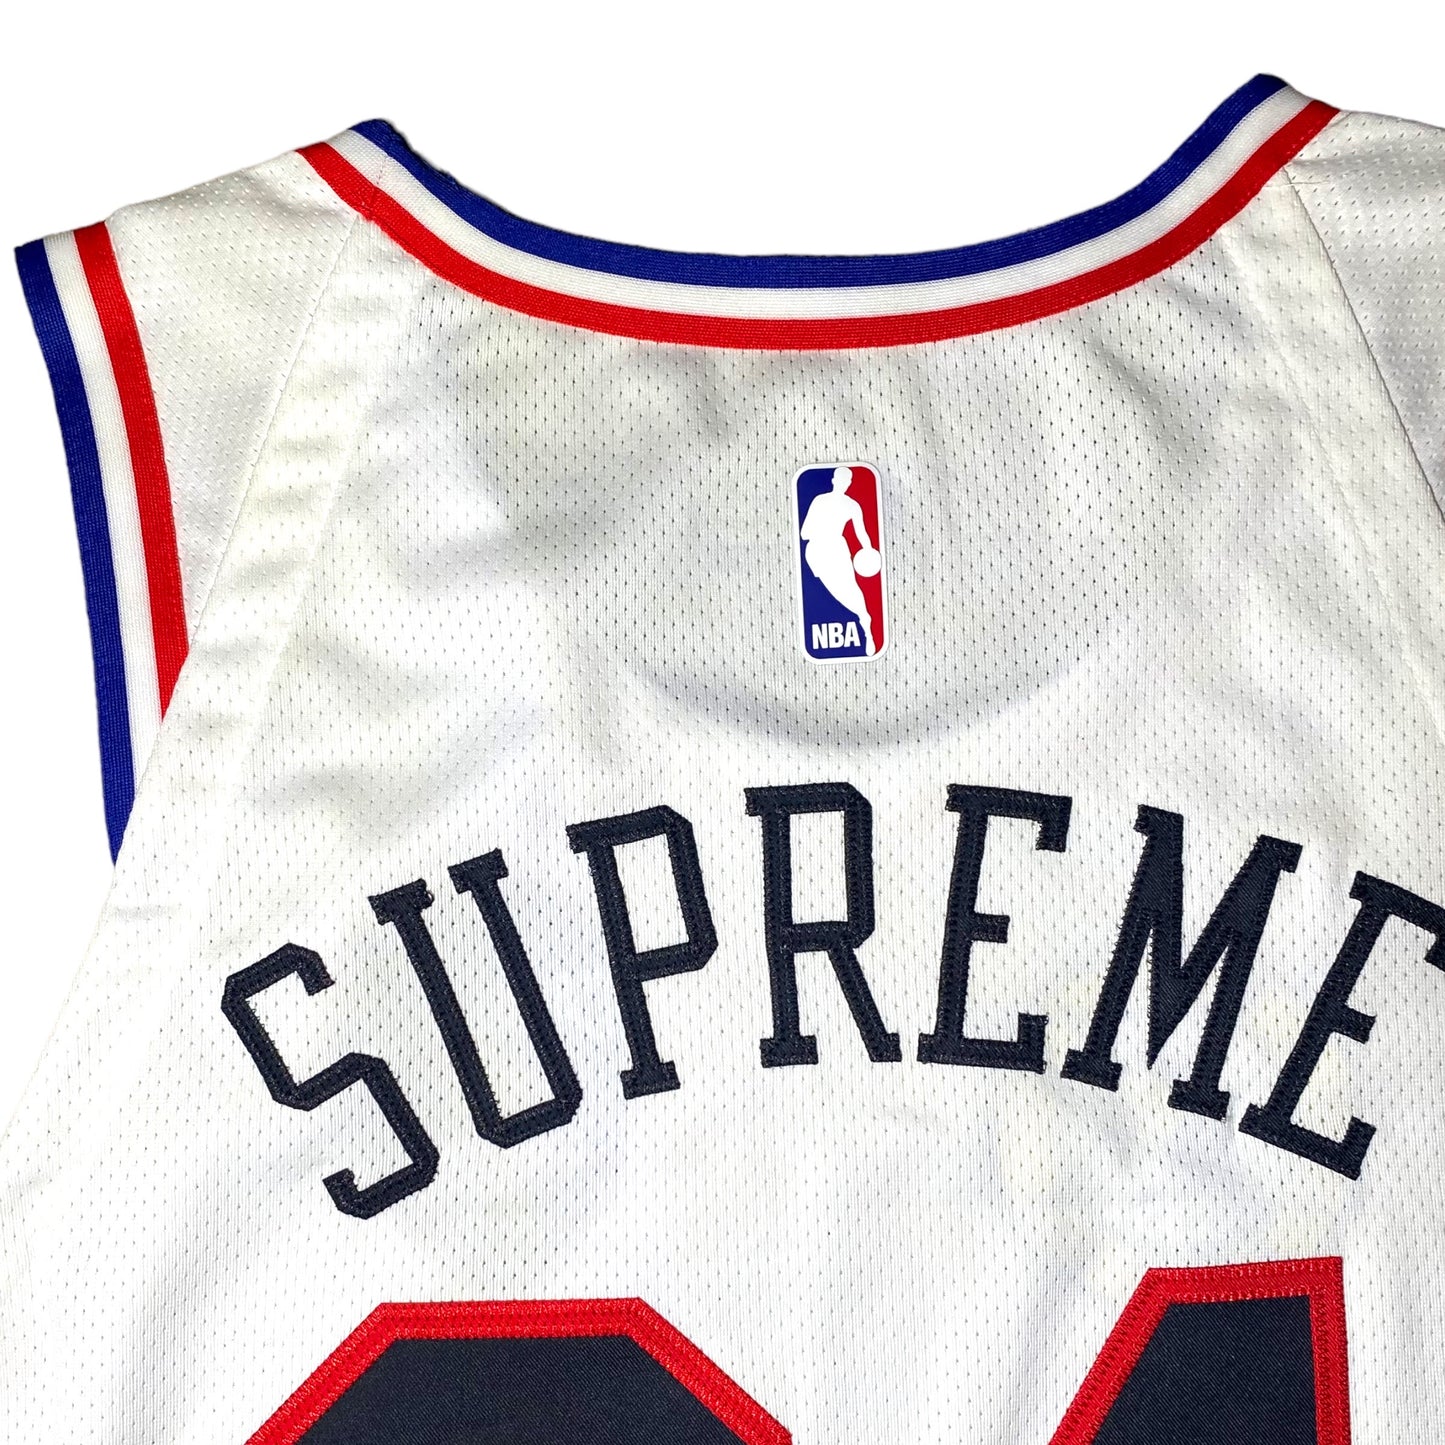 Supreme x Nike/NBA - Teams Authentic White Jersey